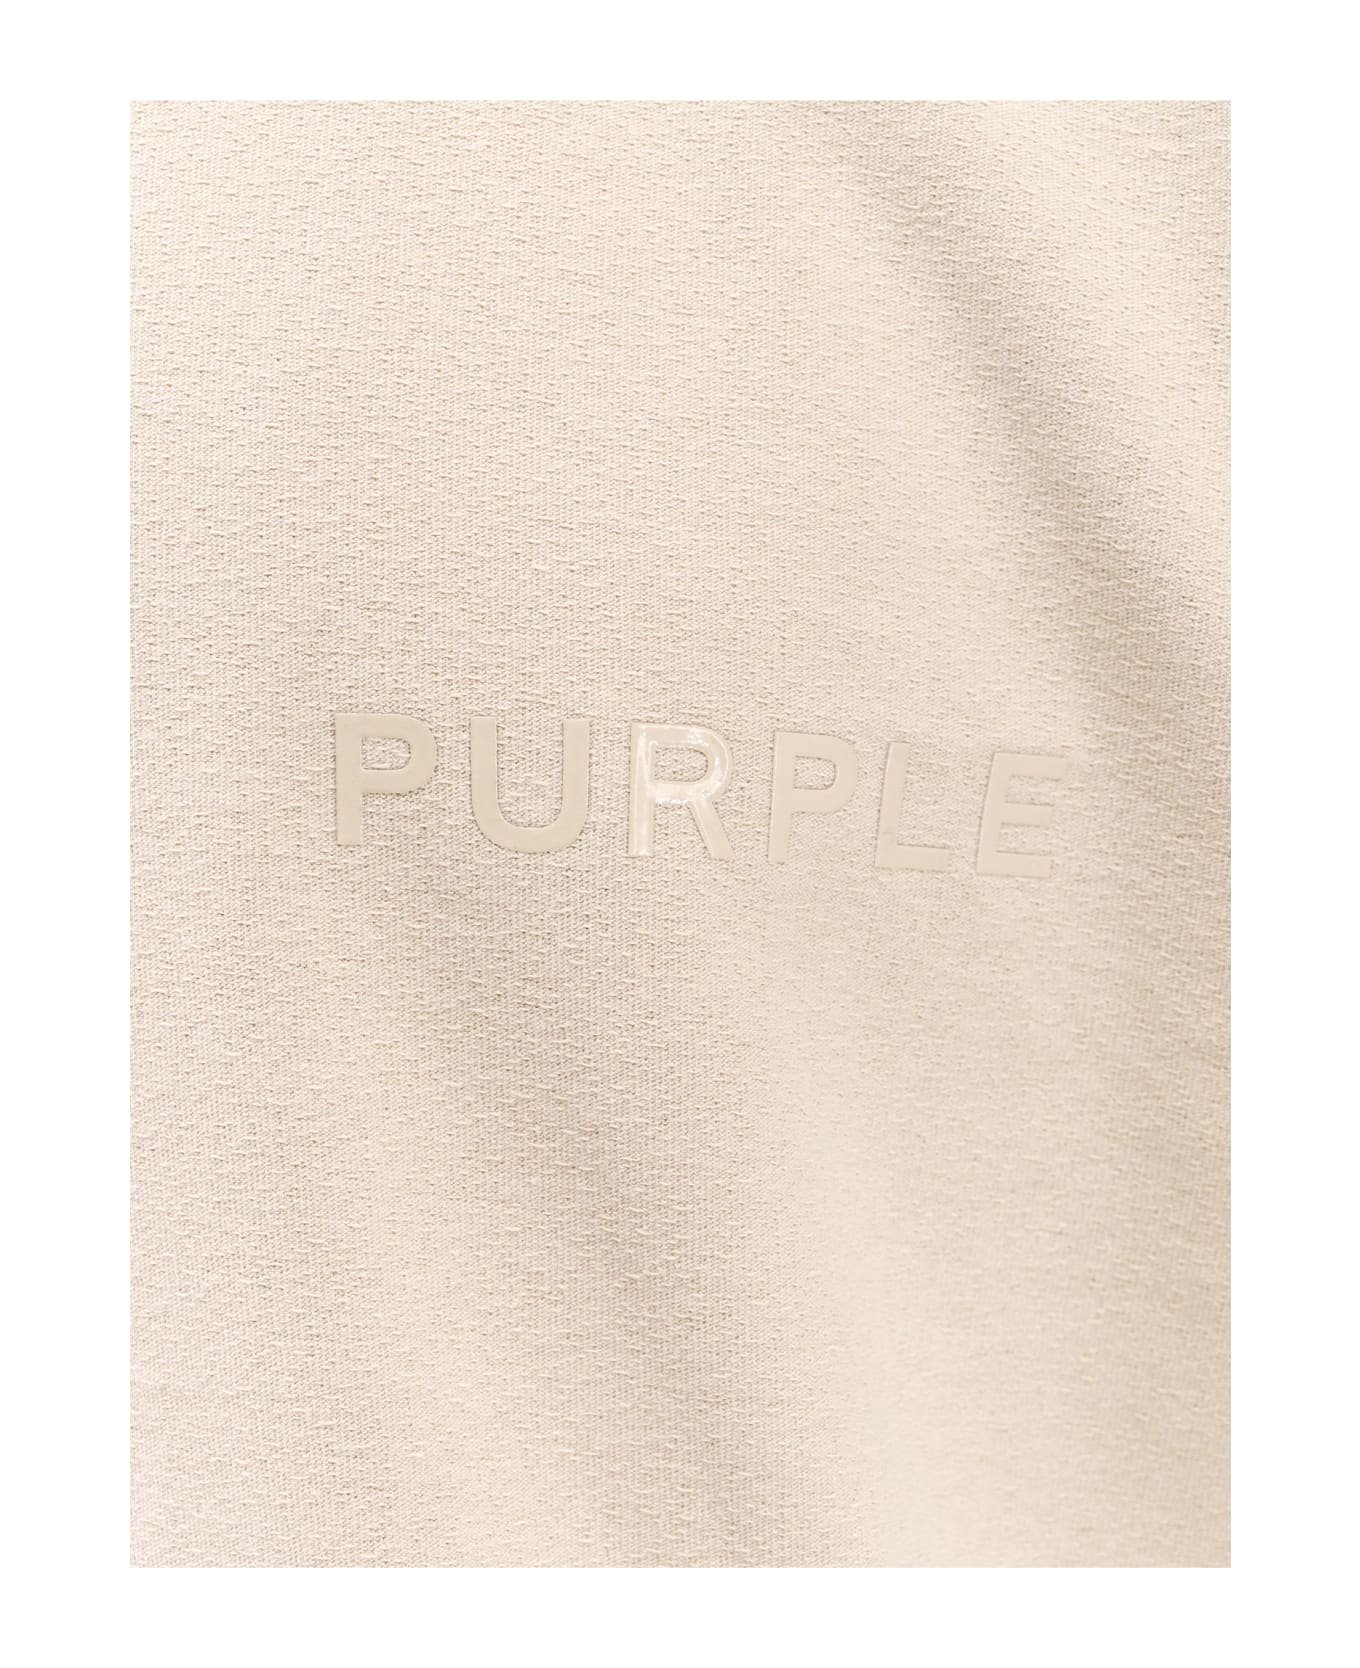 Purple Brand T-shirt - Beige